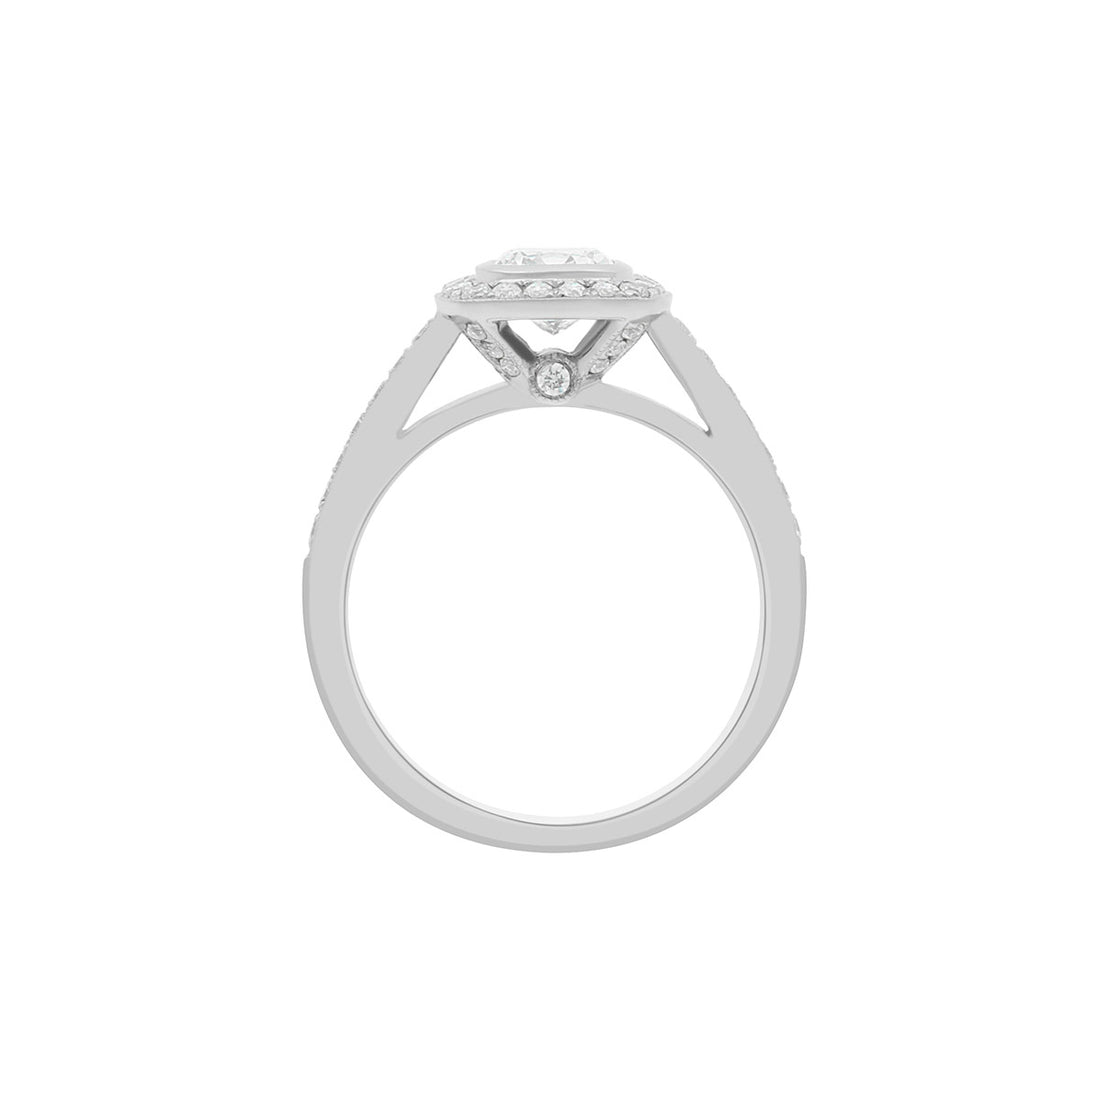 Bezel Set Cushion Cut Engagement Ring in platinum standing upright